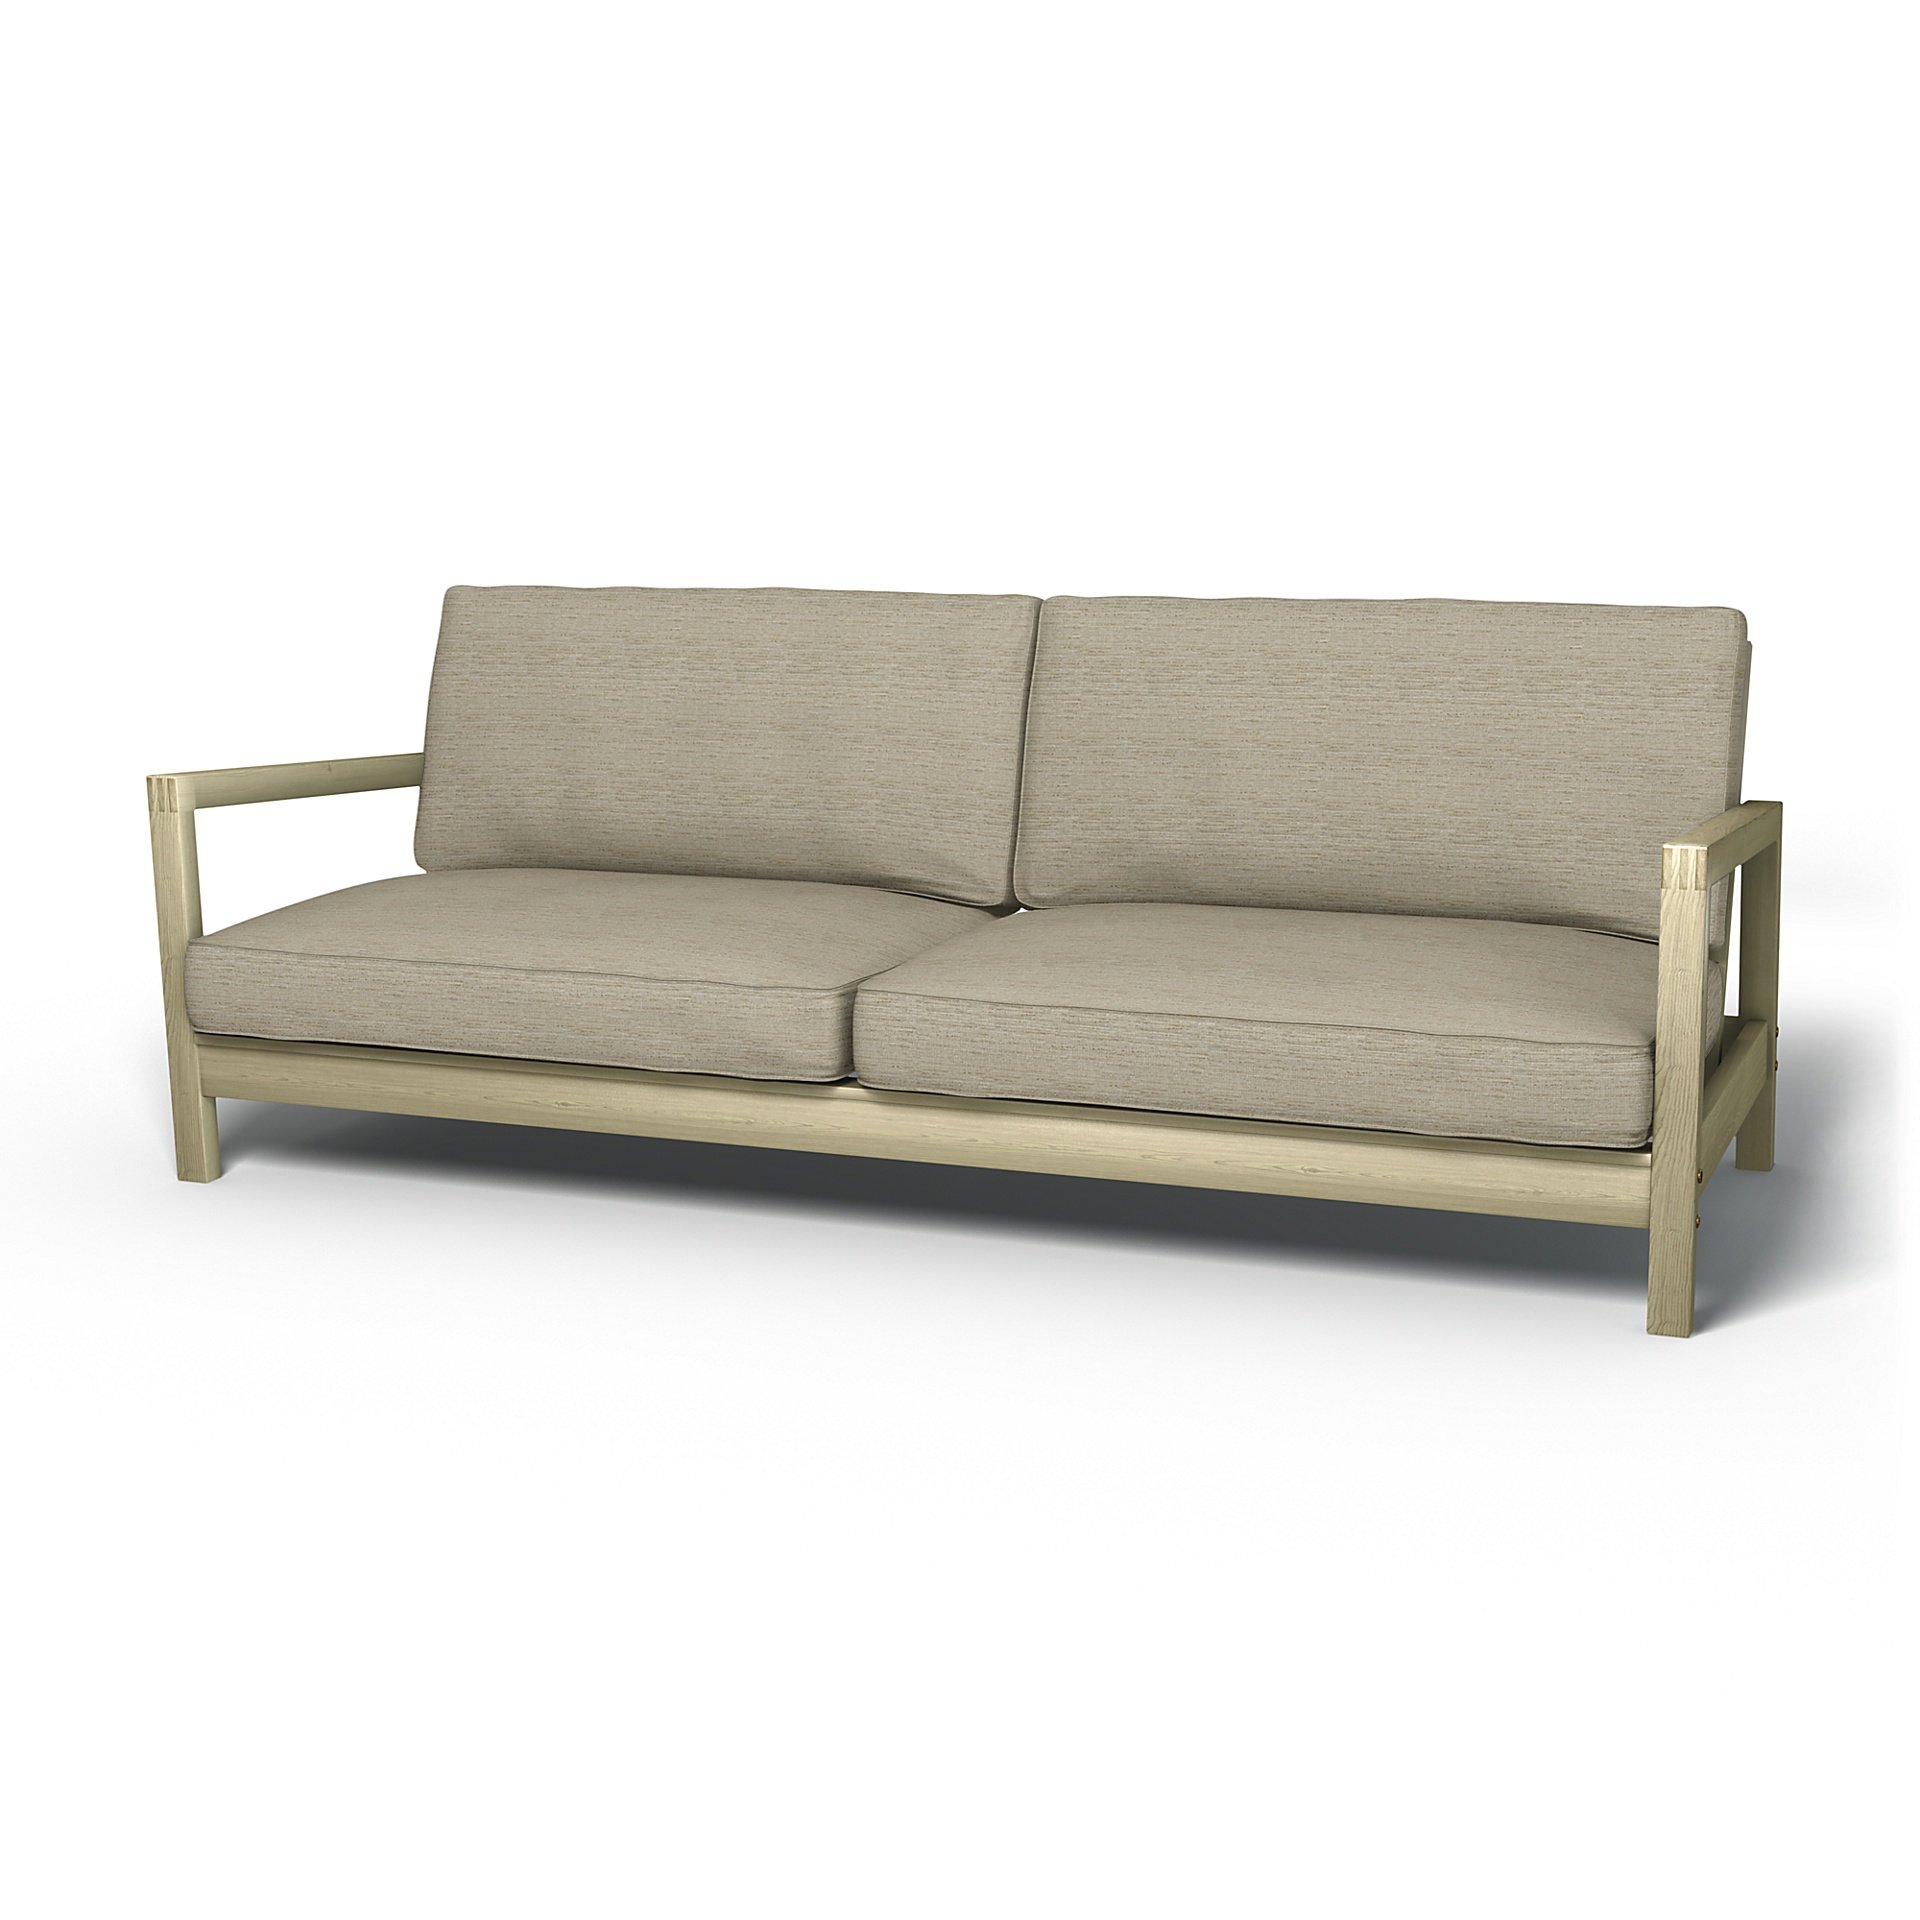 IKEA - Lillberg Sofa Bed Cover, Light Sand, Boucle & Texture - Bemz